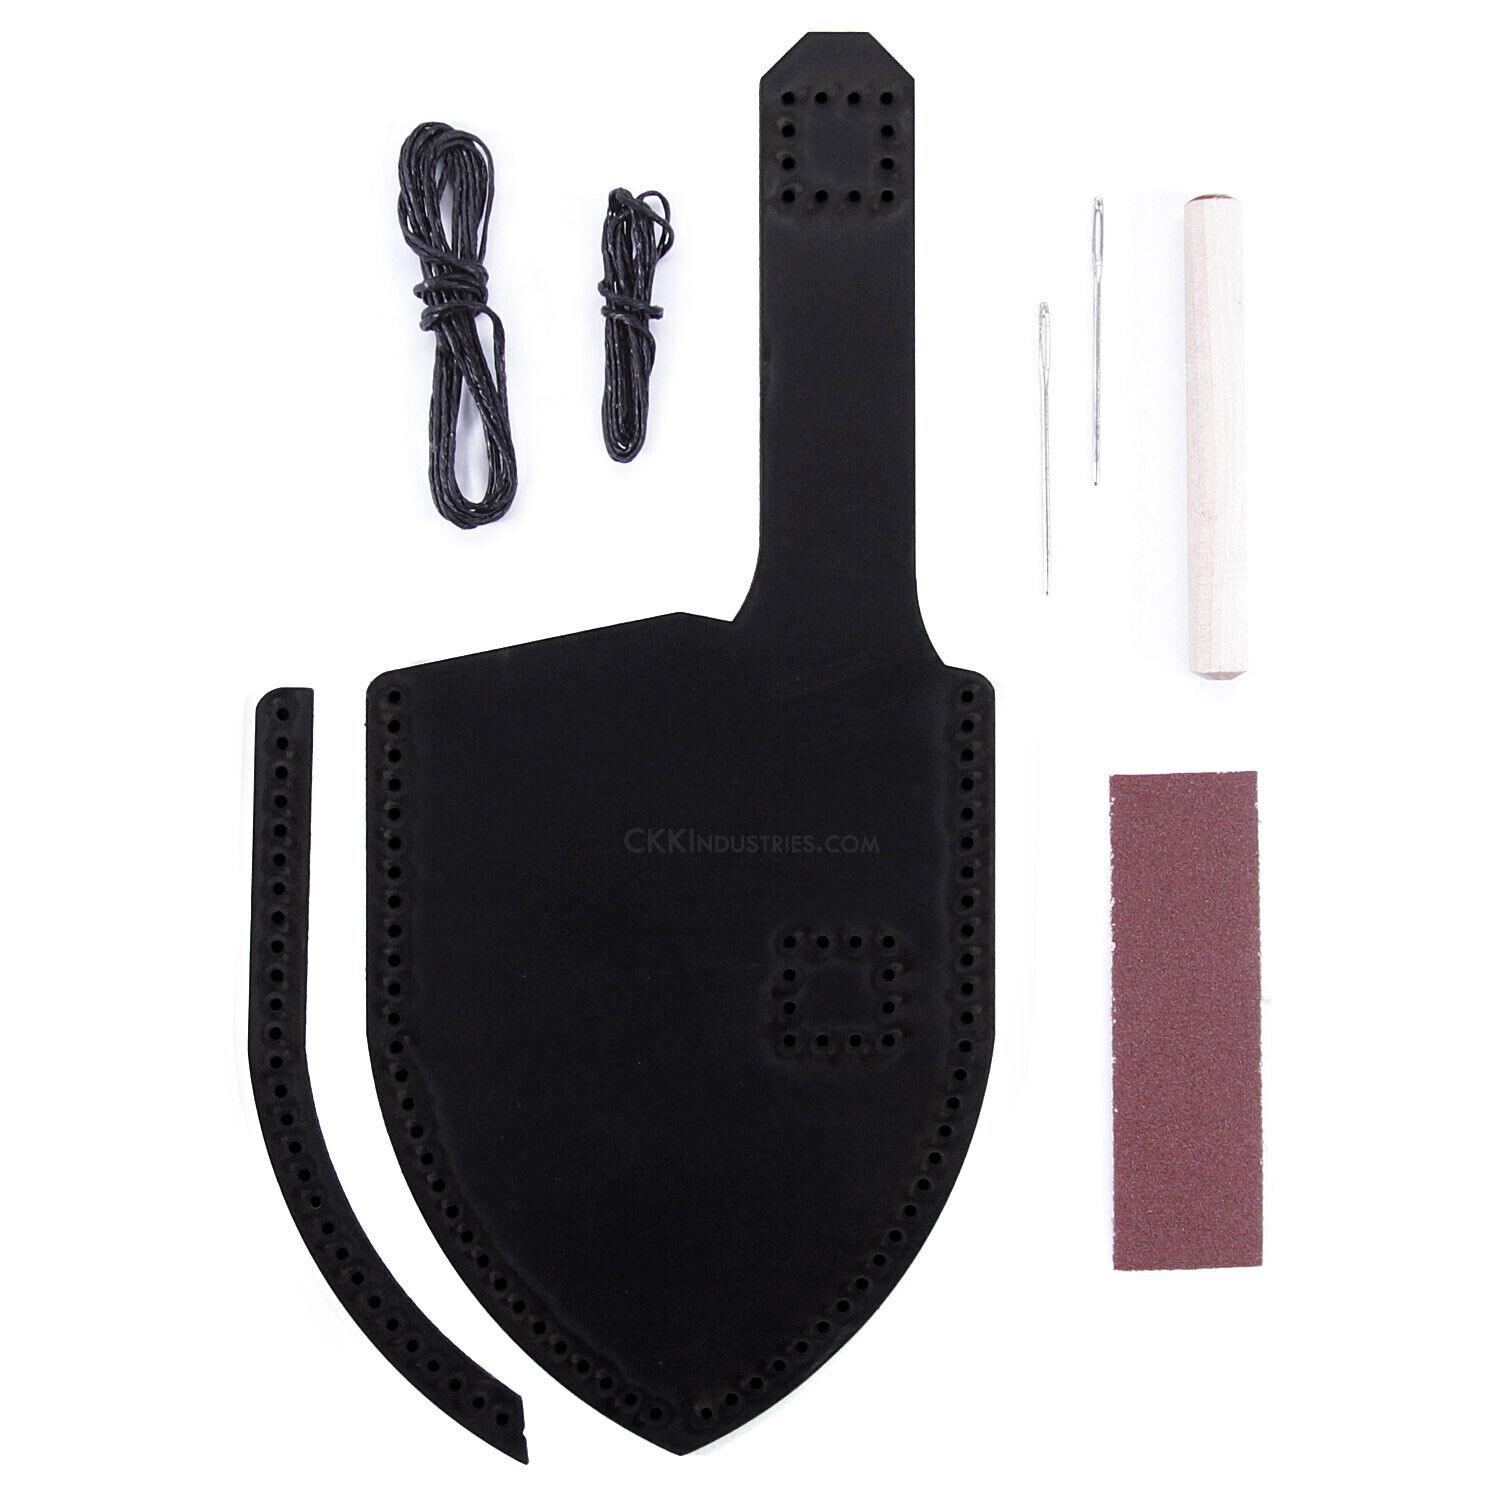 Leather DIY Knife Sheath Making Kit - 8-9oz Cowhide Leather - Black & Brown